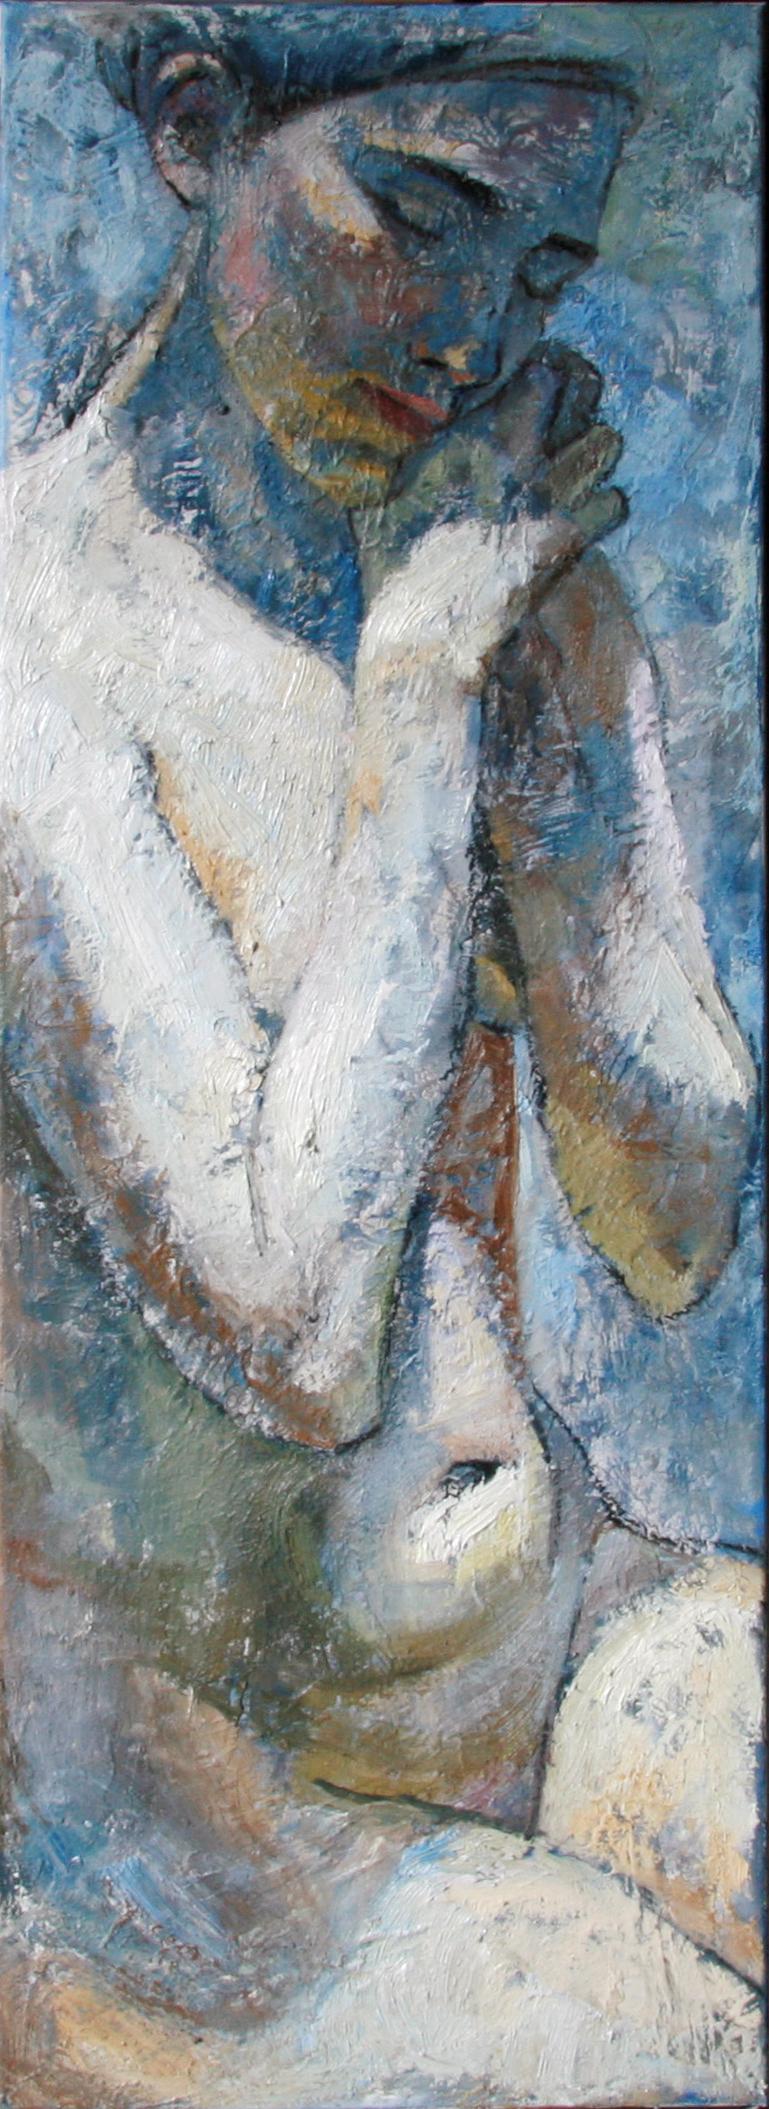 Montse Valdés Portrait Painting - 4-2-11 - 21st Century, Contemporary, Nude Painting, Oil on Canvas